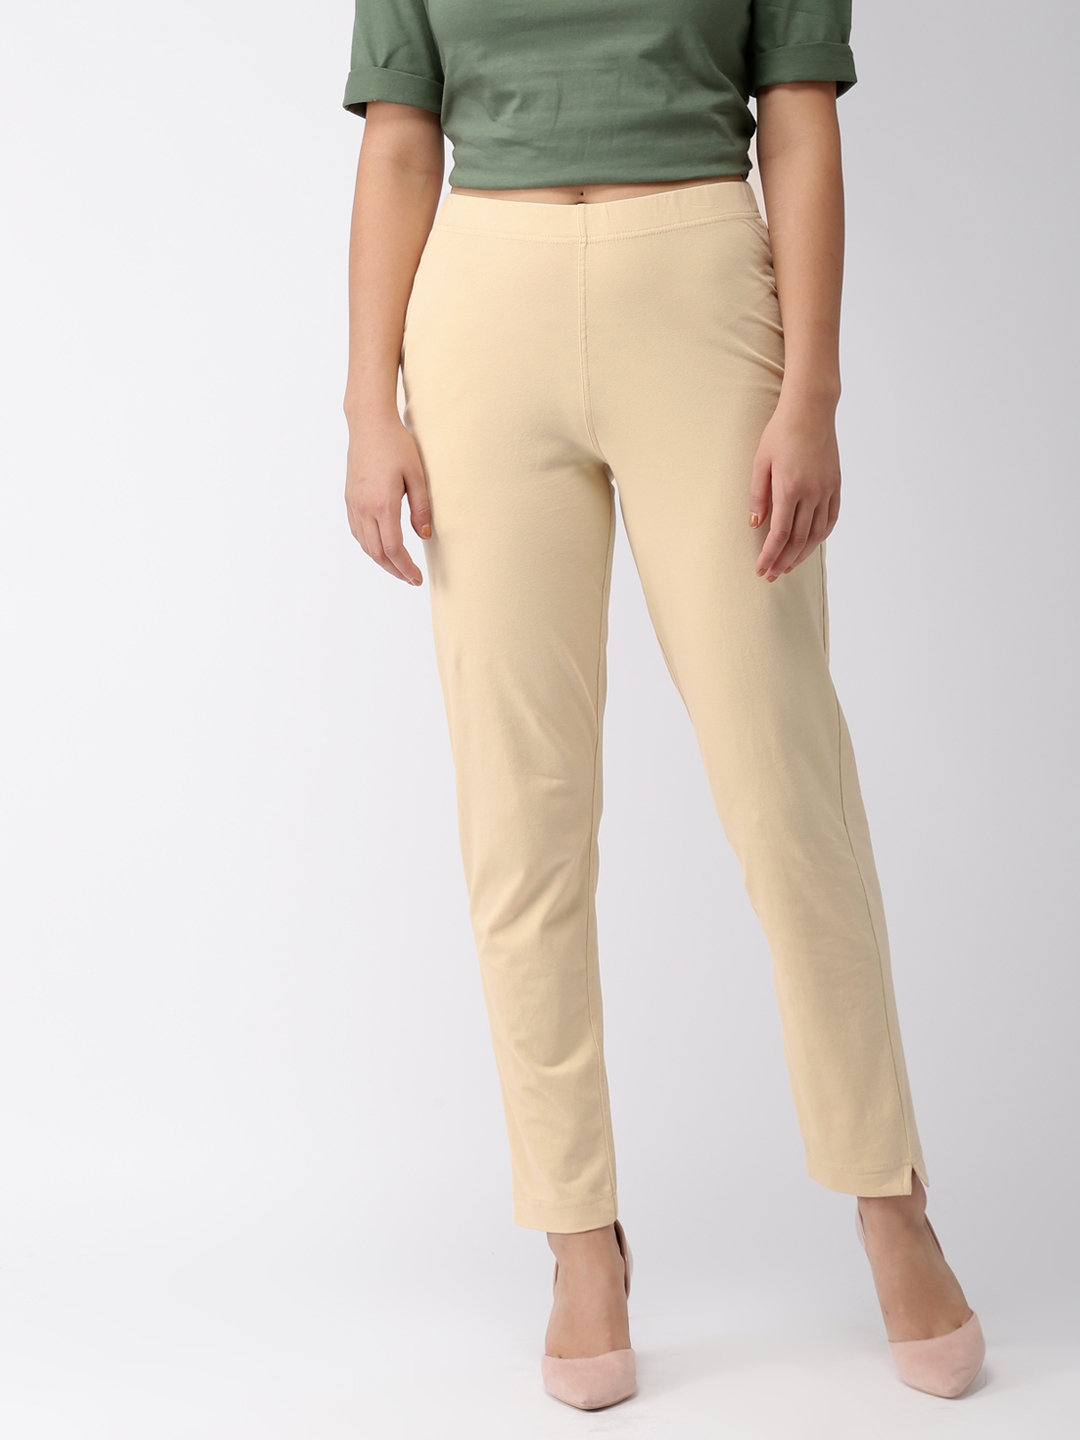 Buy Cream Trousers  Pants for Women by TRUSER Online  Ajiocom